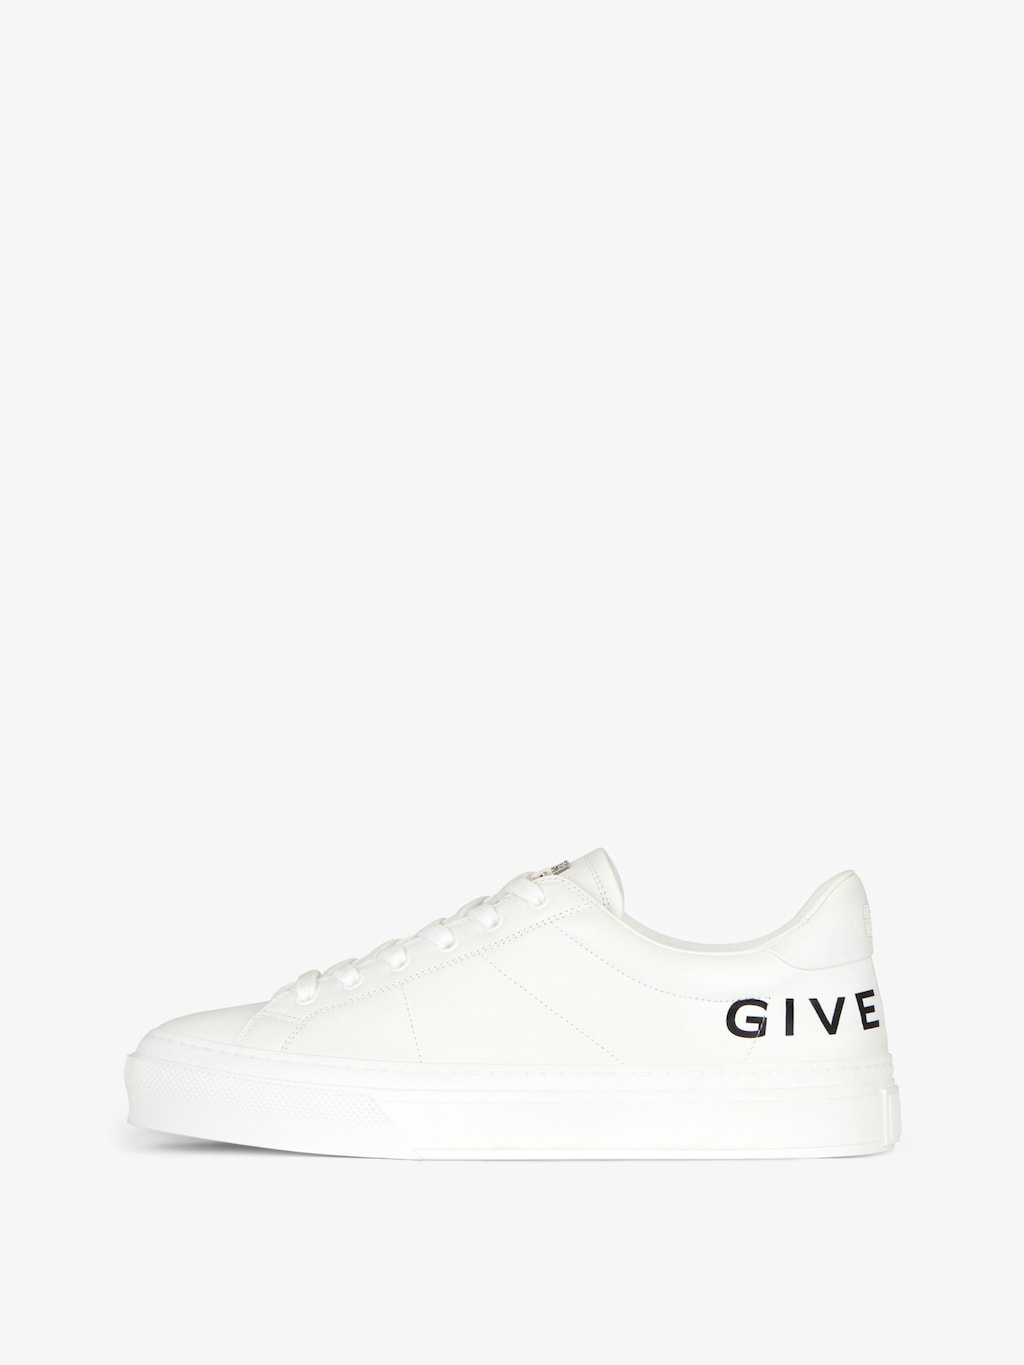 Givenchy logo strap sneaker slip-on sneakers, Women's Fashion, Footwear,  Sneakers on Carousell